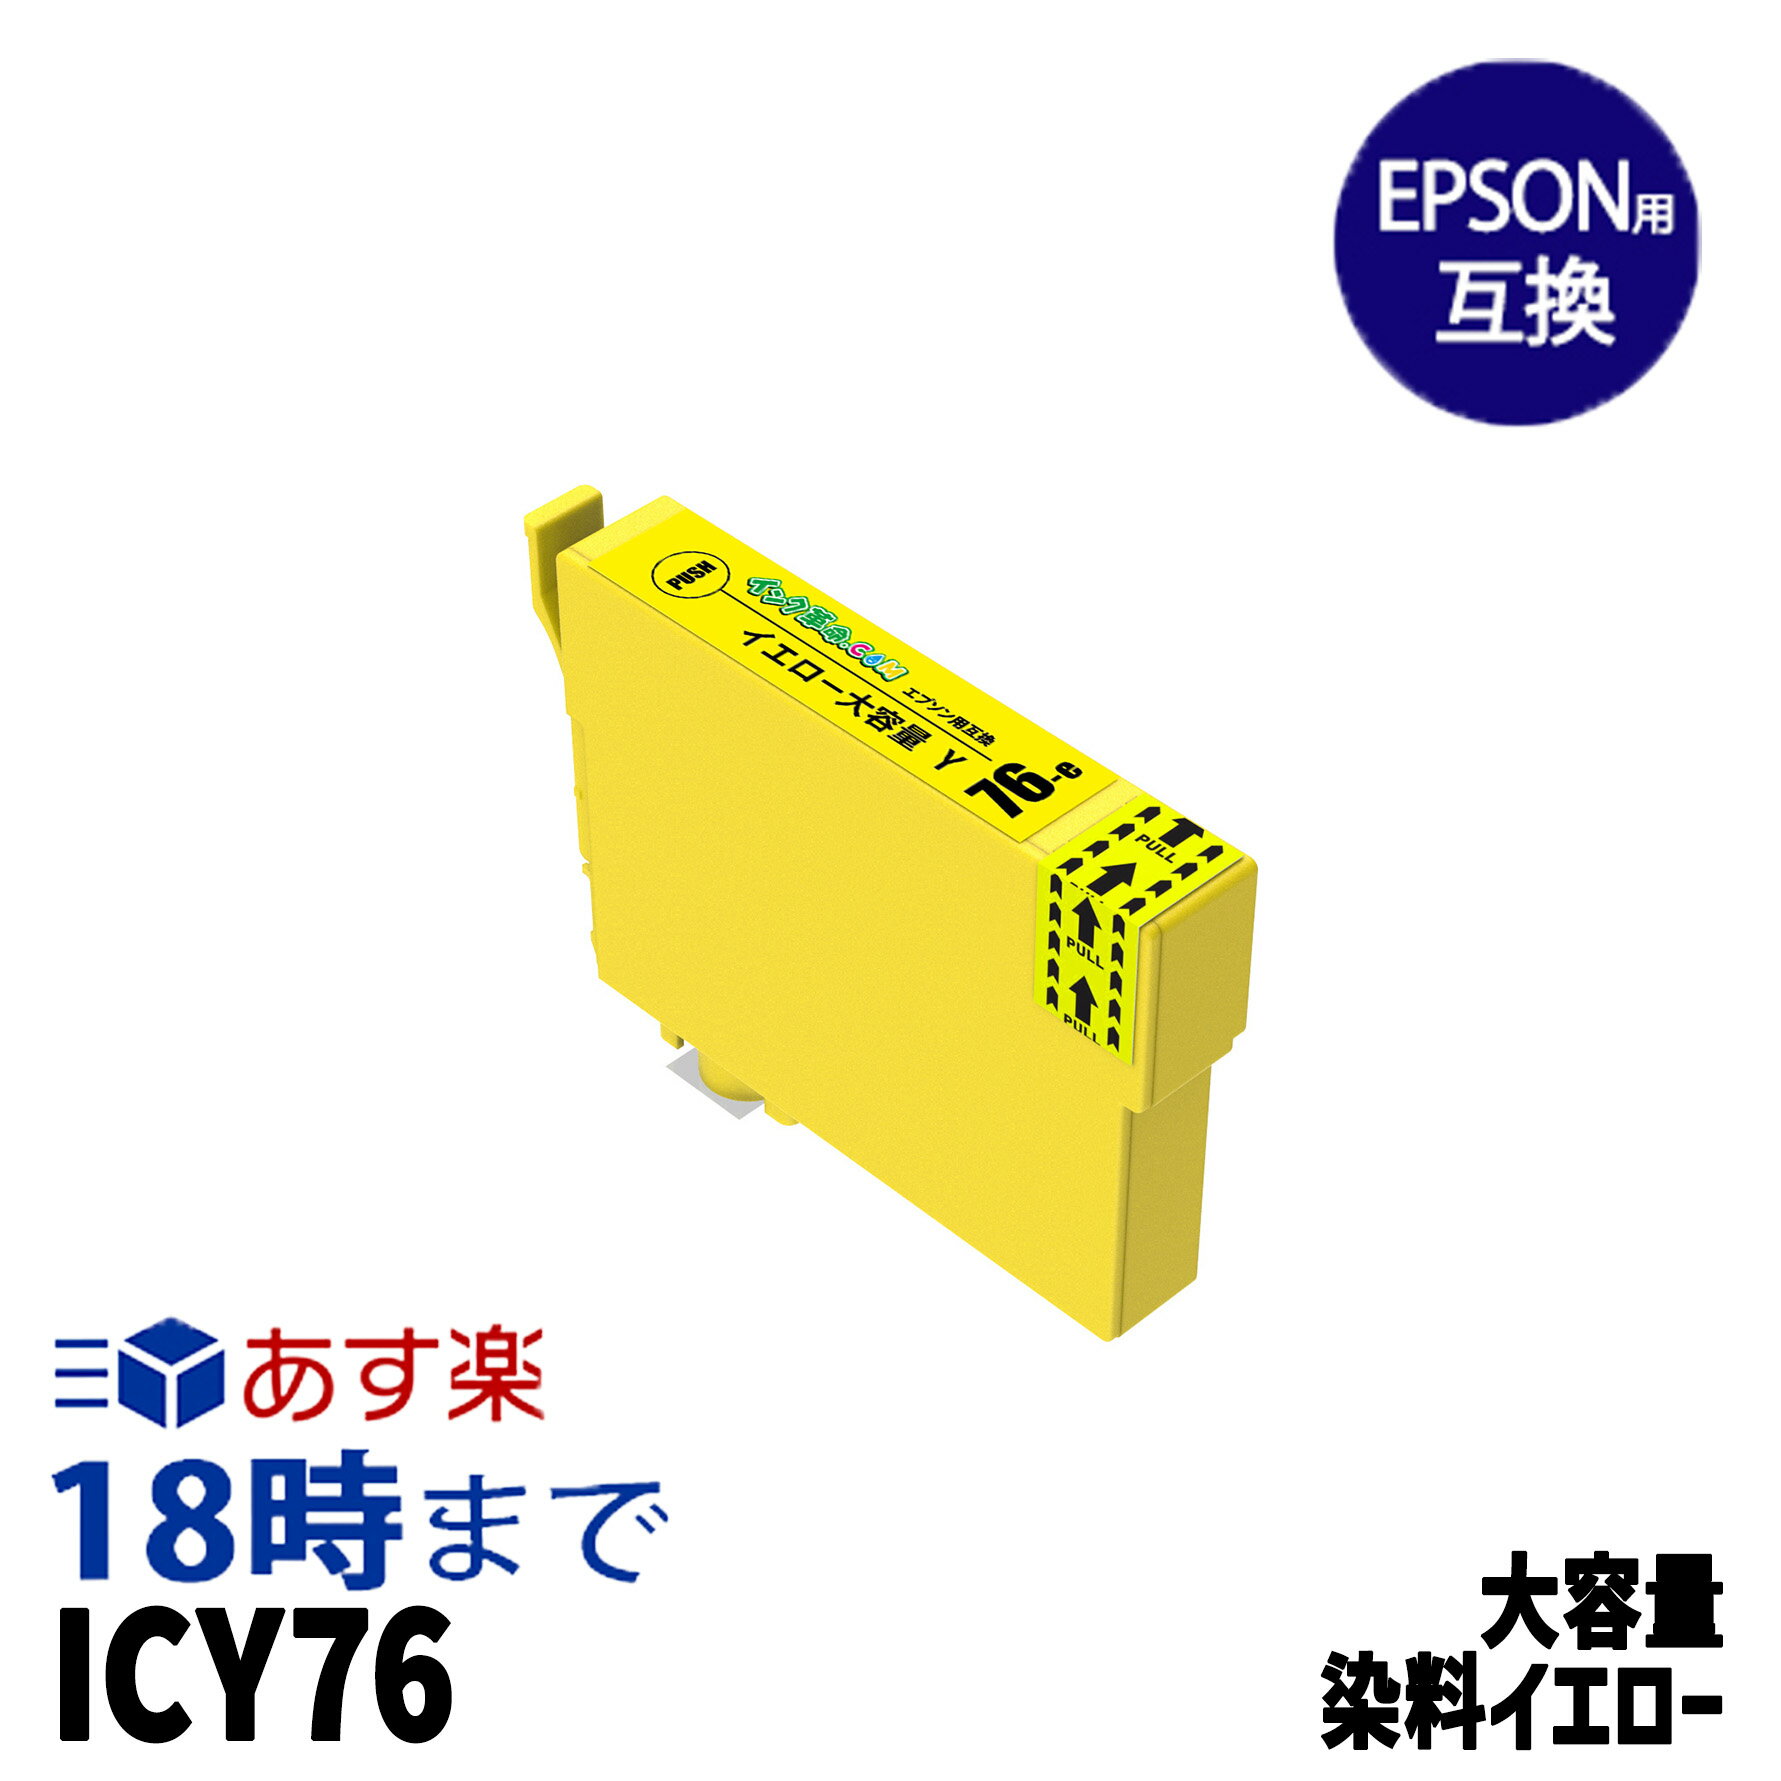 ICY76 染料イエロー IC76 大容量 エプソン用 EPSON用 互換インク ビジネスインクジェット【インク革命】